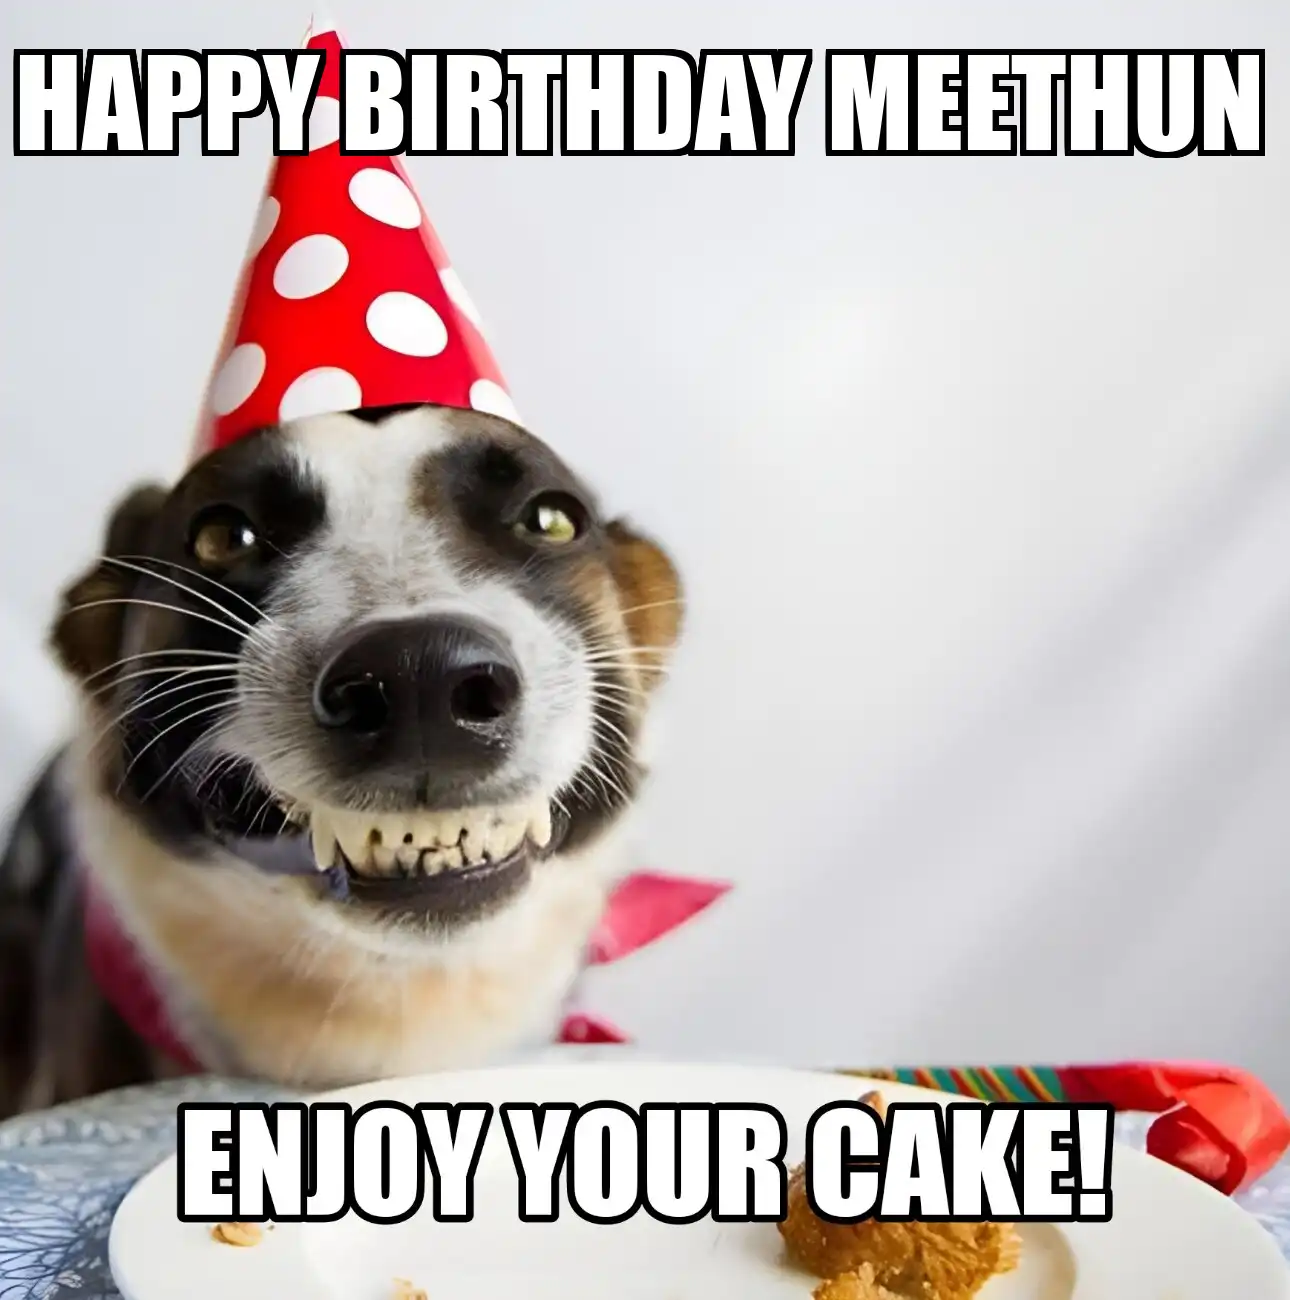 Happy Birthday Meethun Enjoy Your Cake Dog Meme